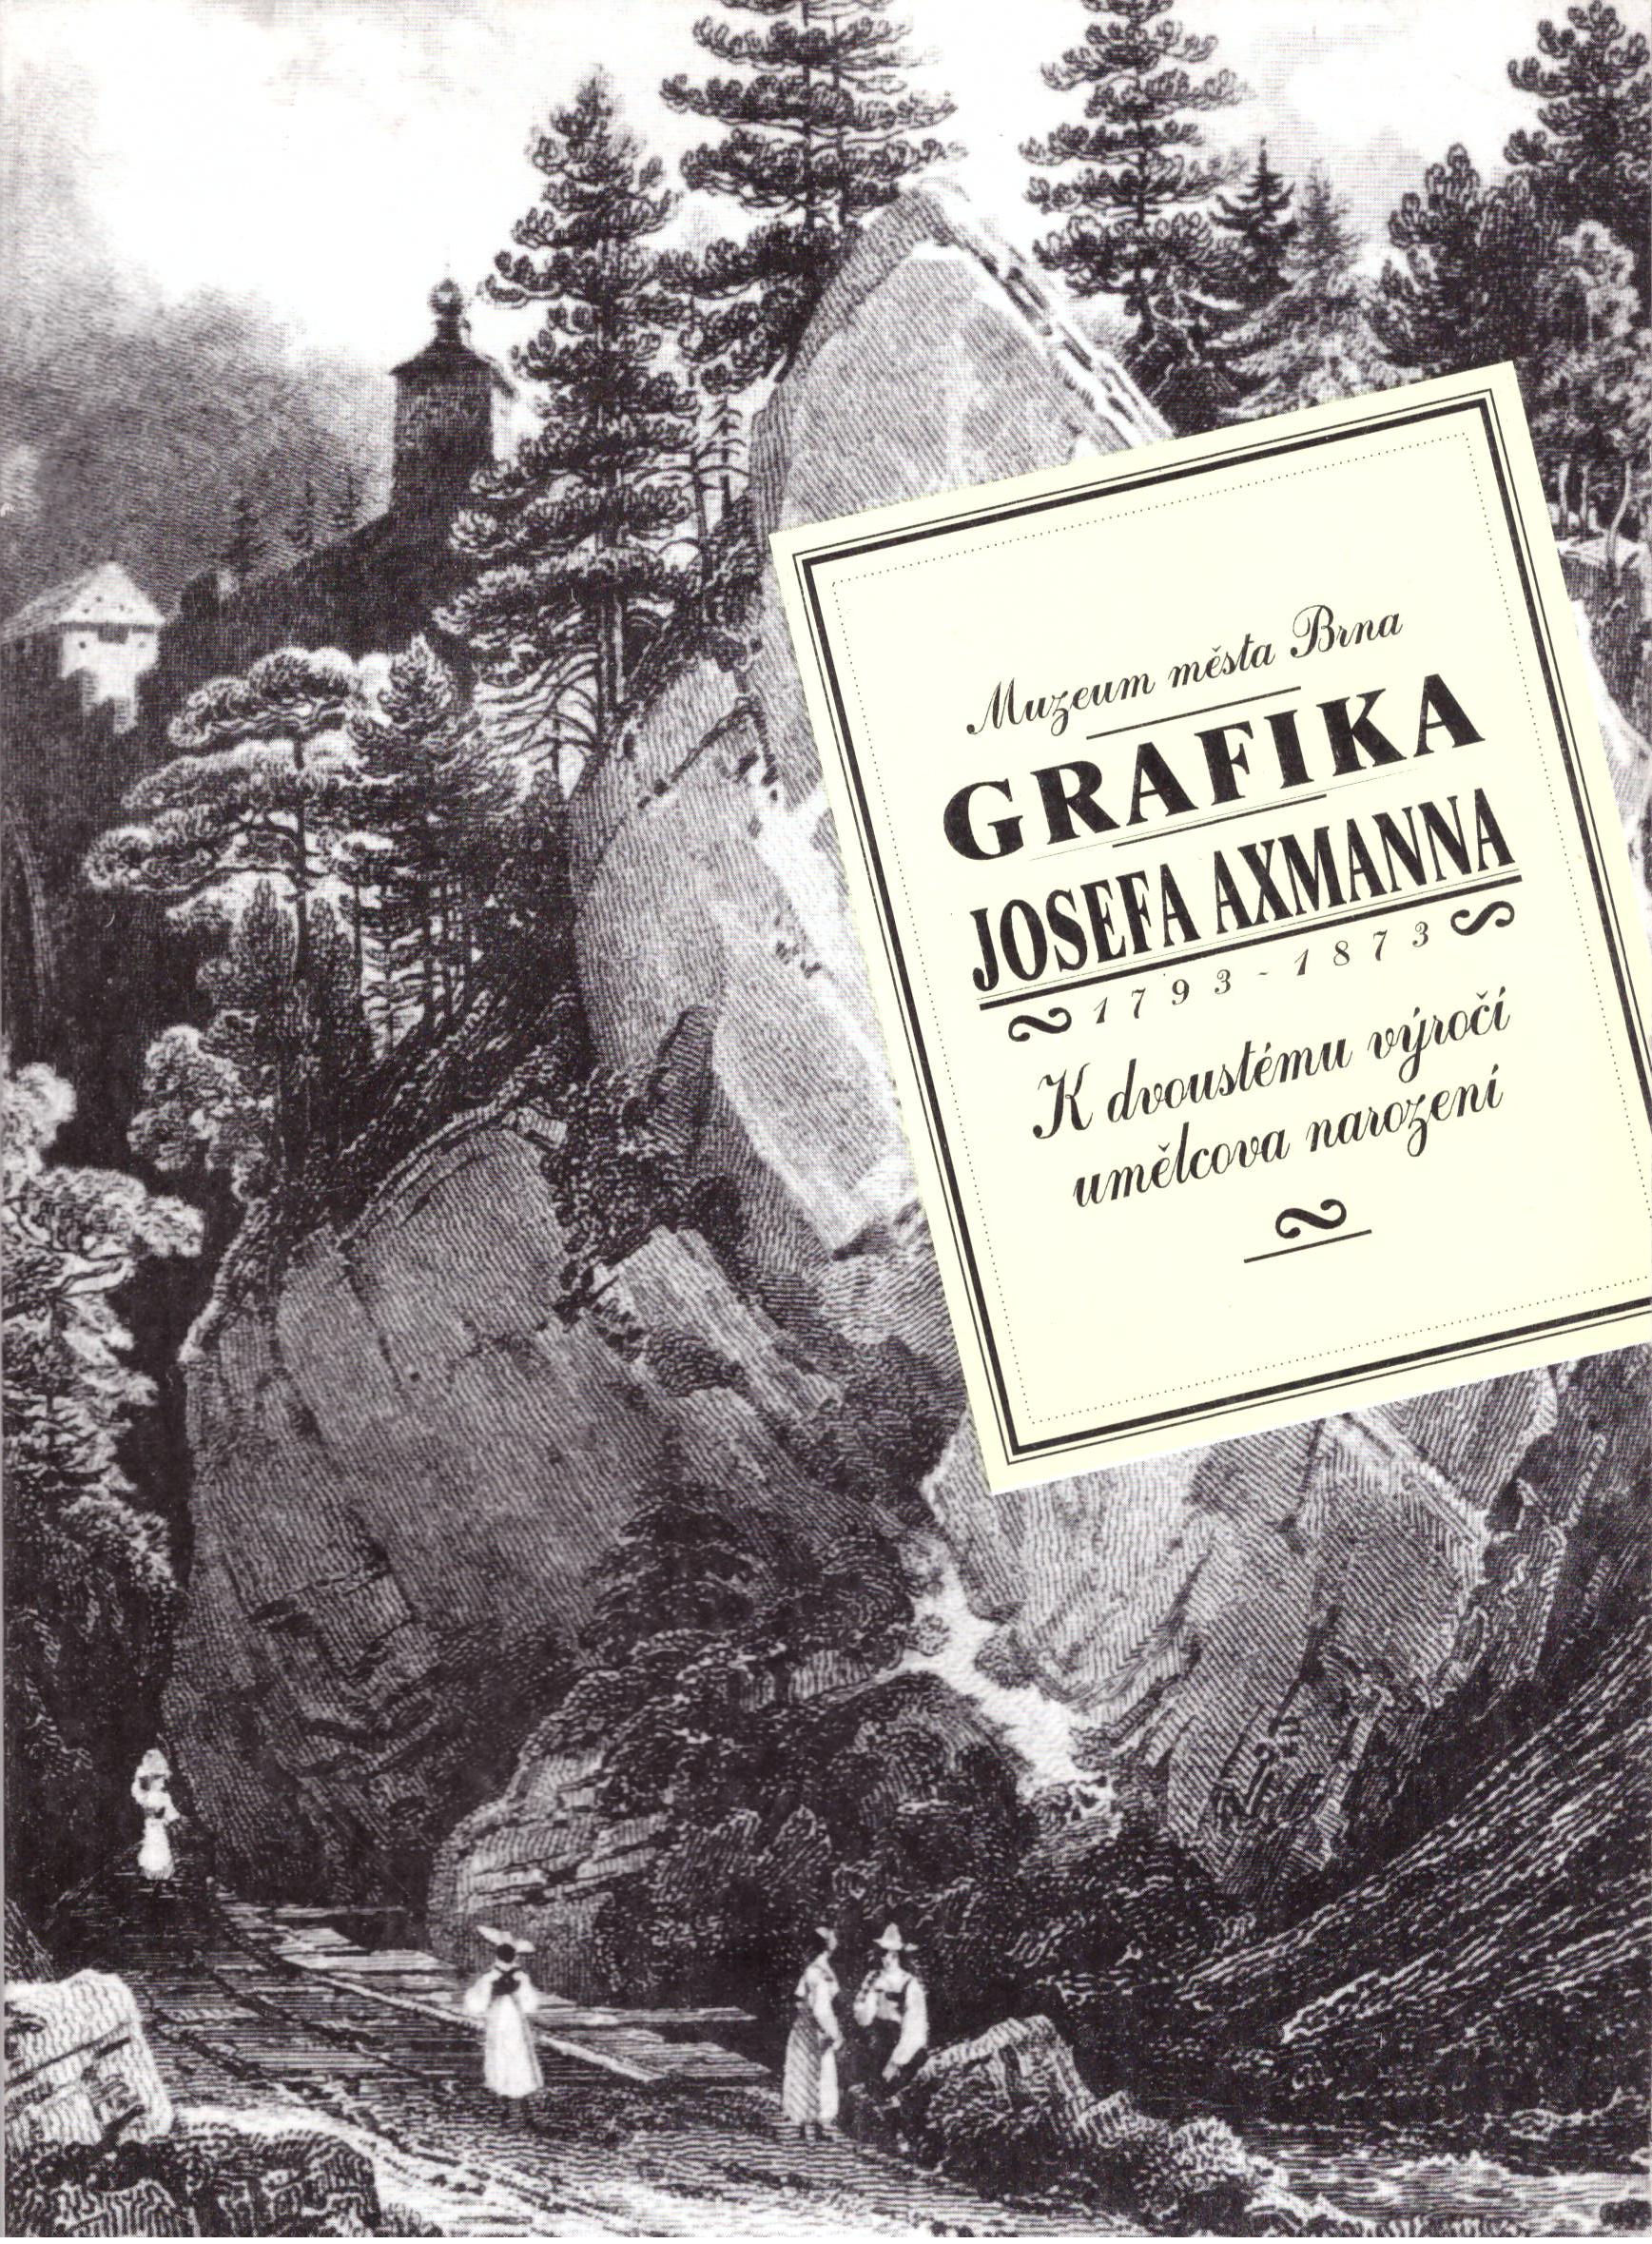 Grafika Josefa Axmanna 1973-1873 